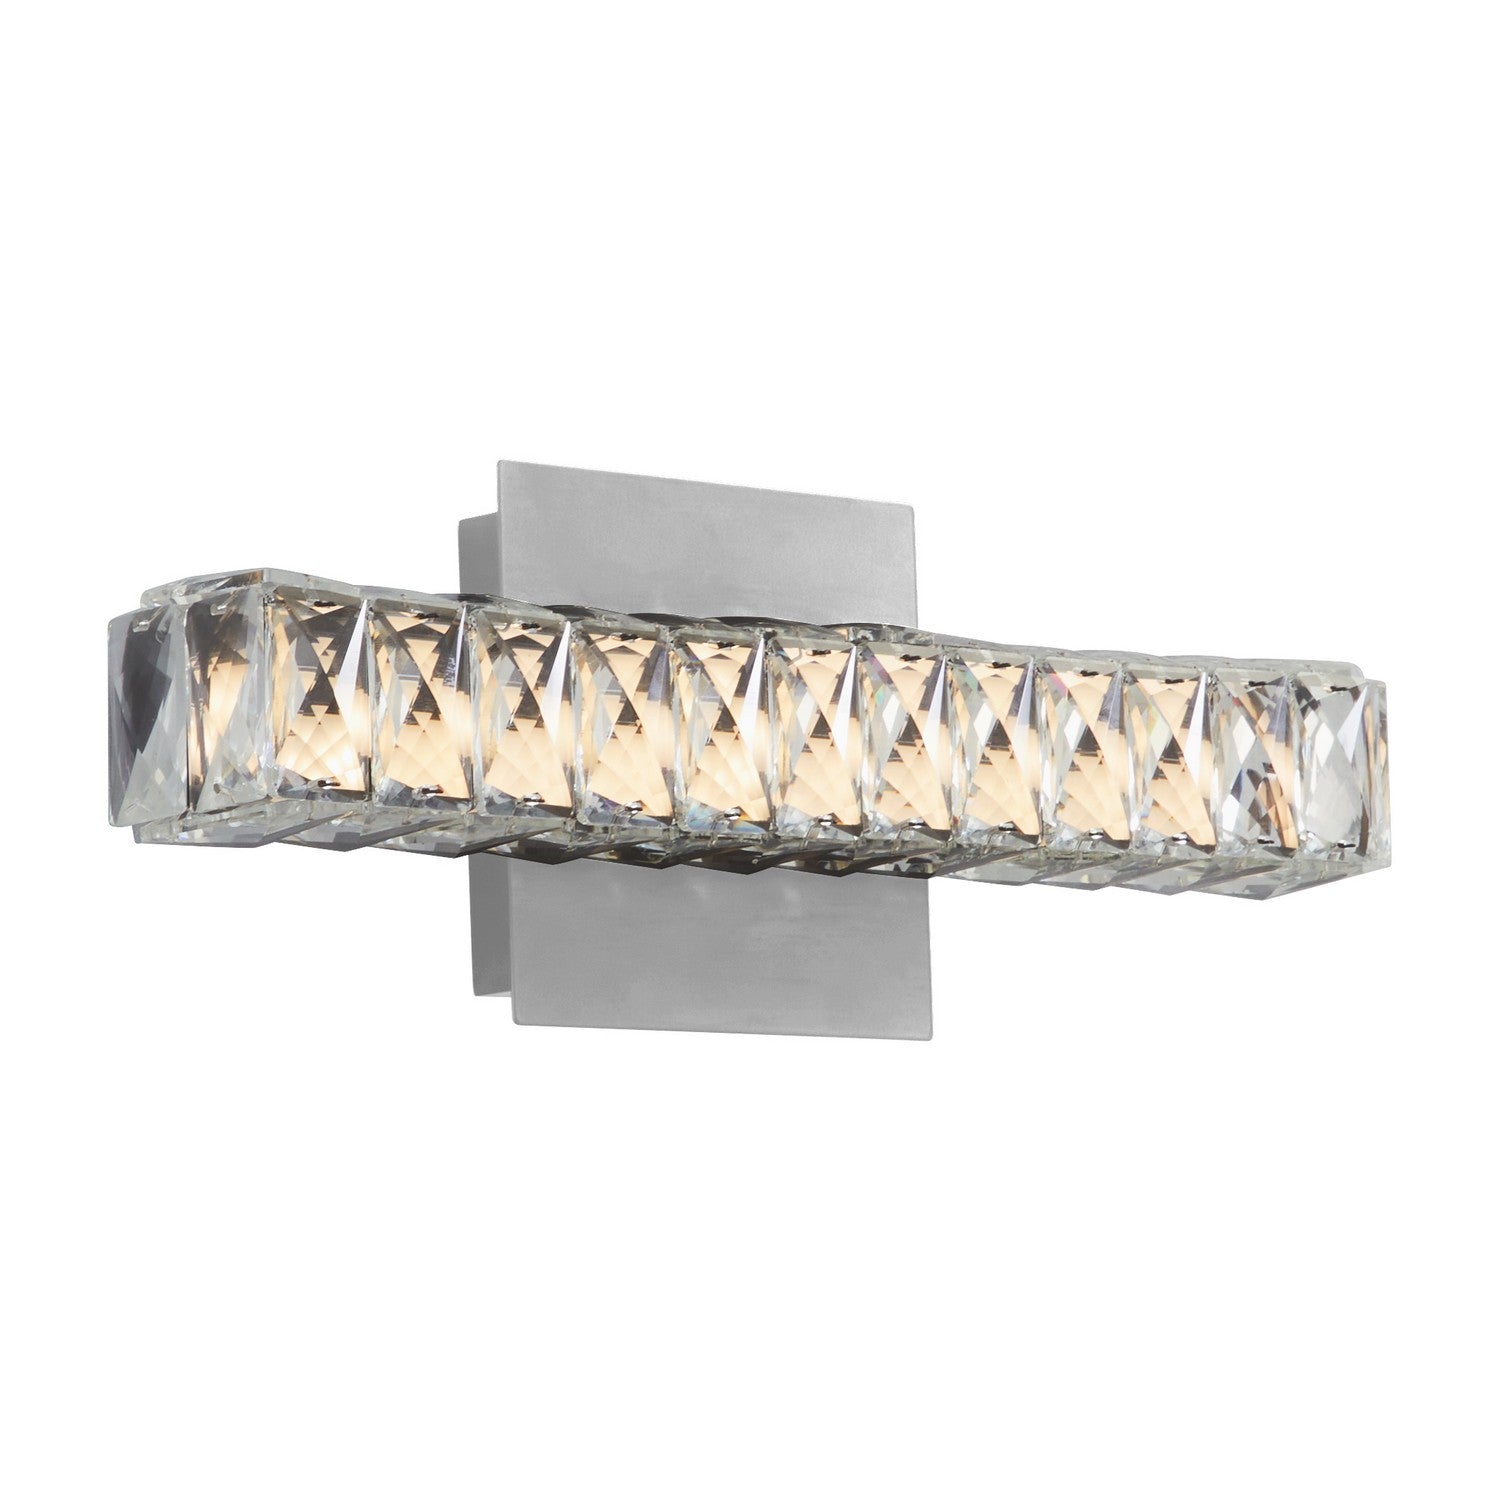 Oxygen Elan 3-572-24 Modern Sconce LED Wall Light Fixture - Satin Nickel